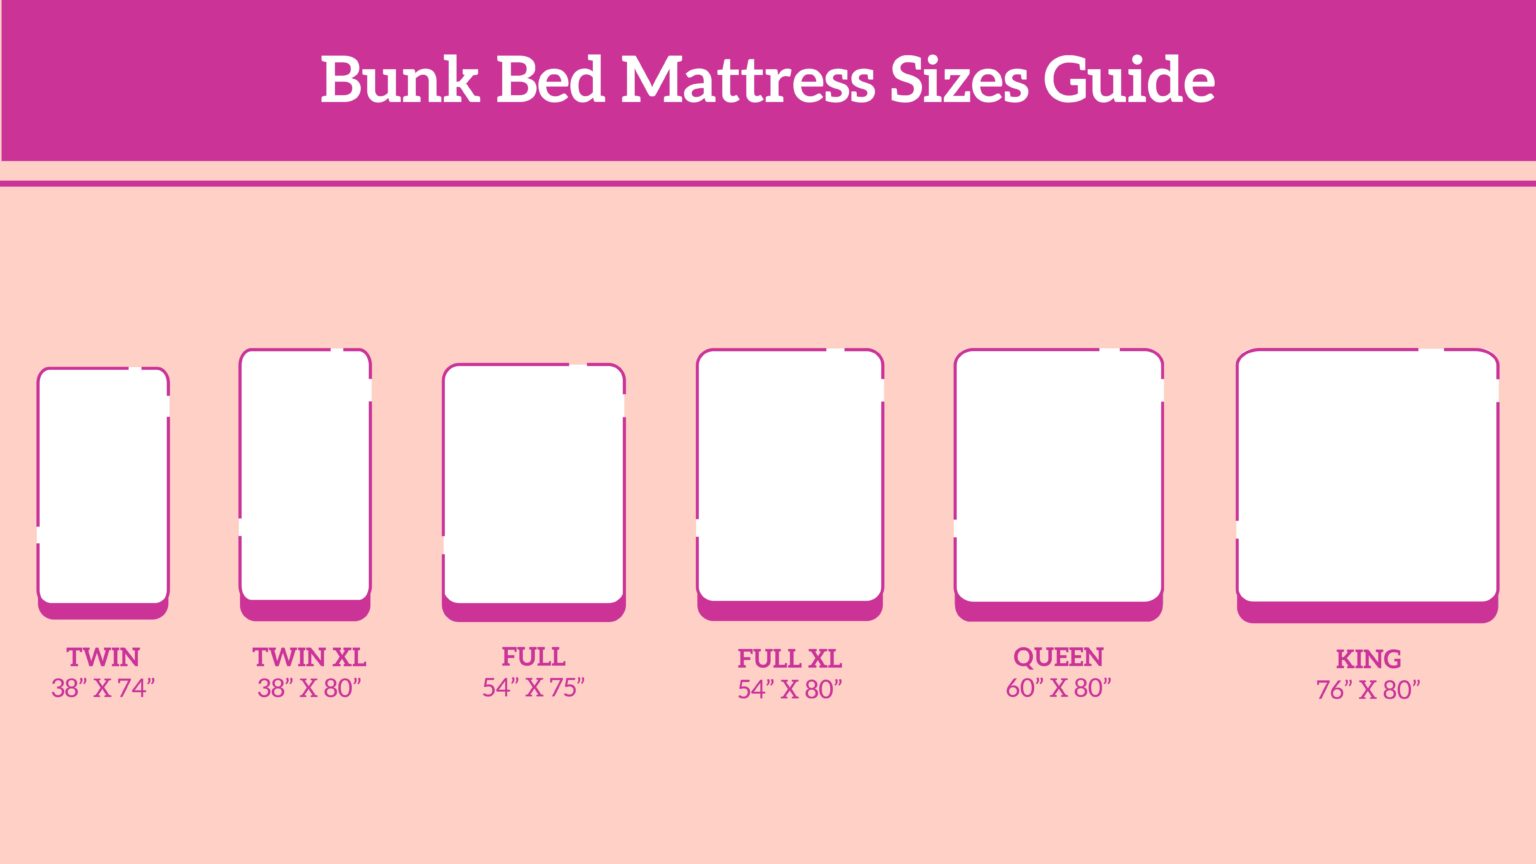 replacing cot size nmbunk mattresses